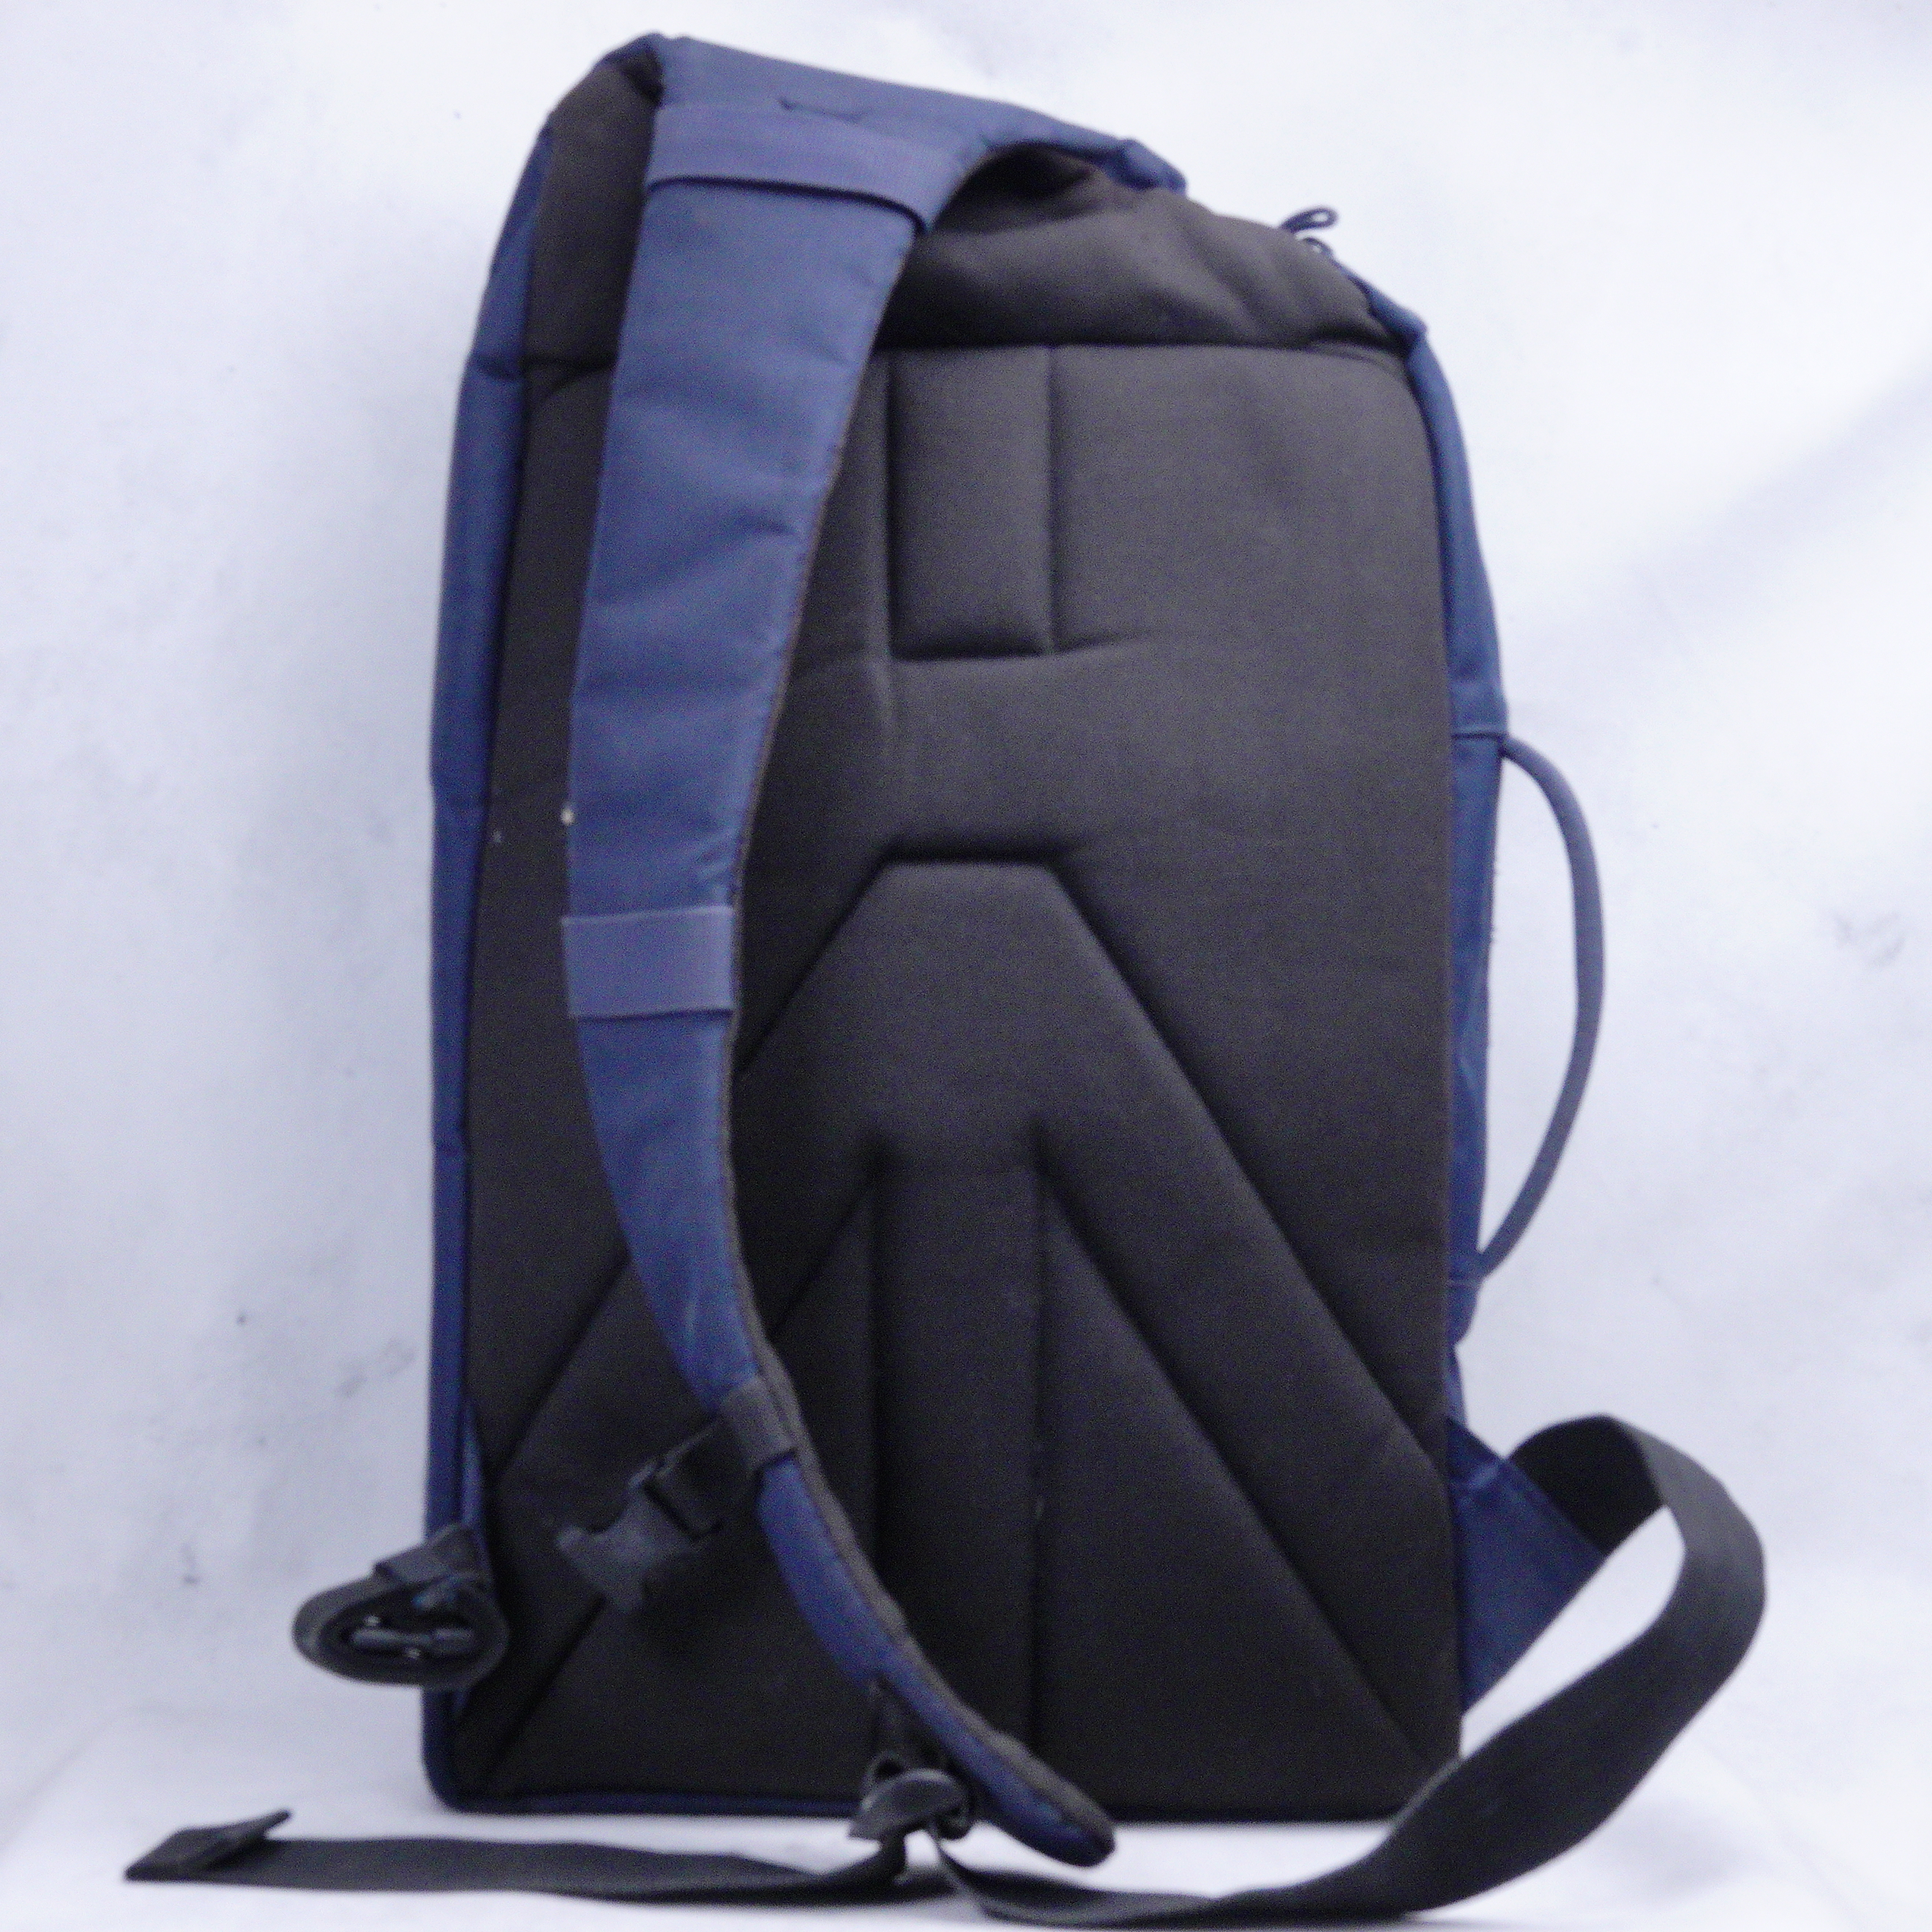 Manfrotto Stile Collection Brio 30 Sling Bag - Usado